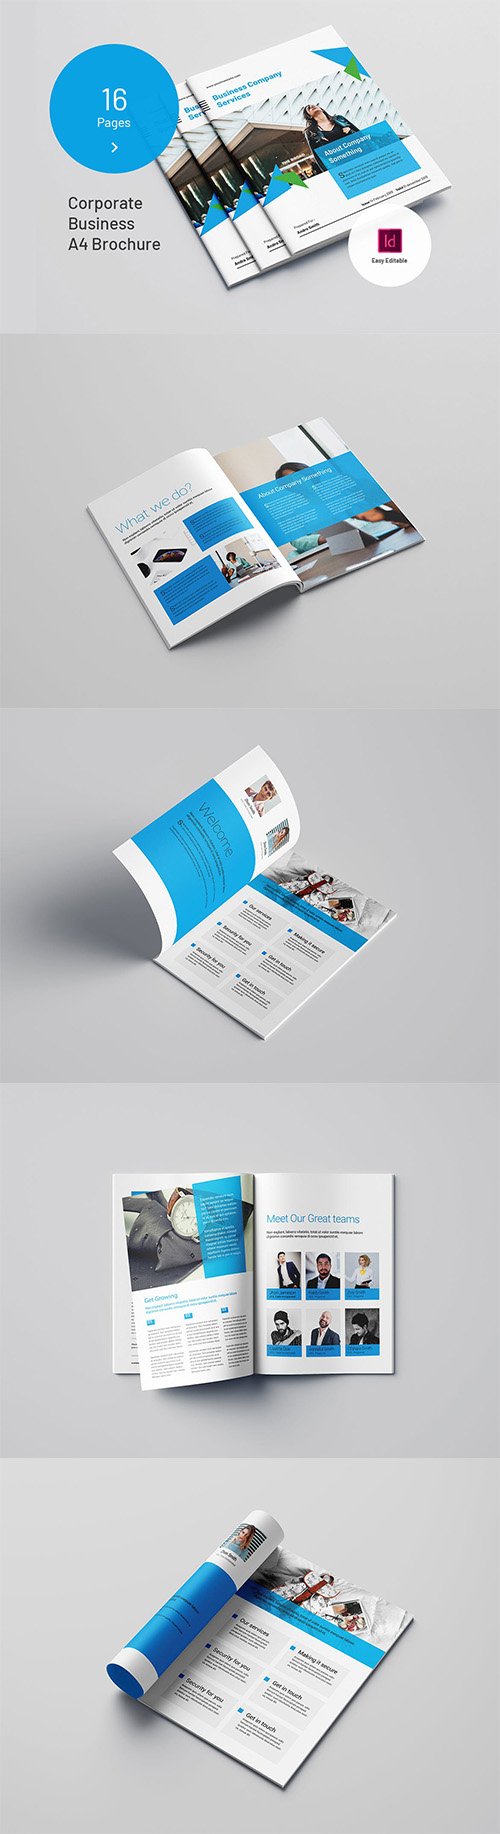 Corporate Business A4 Brochure